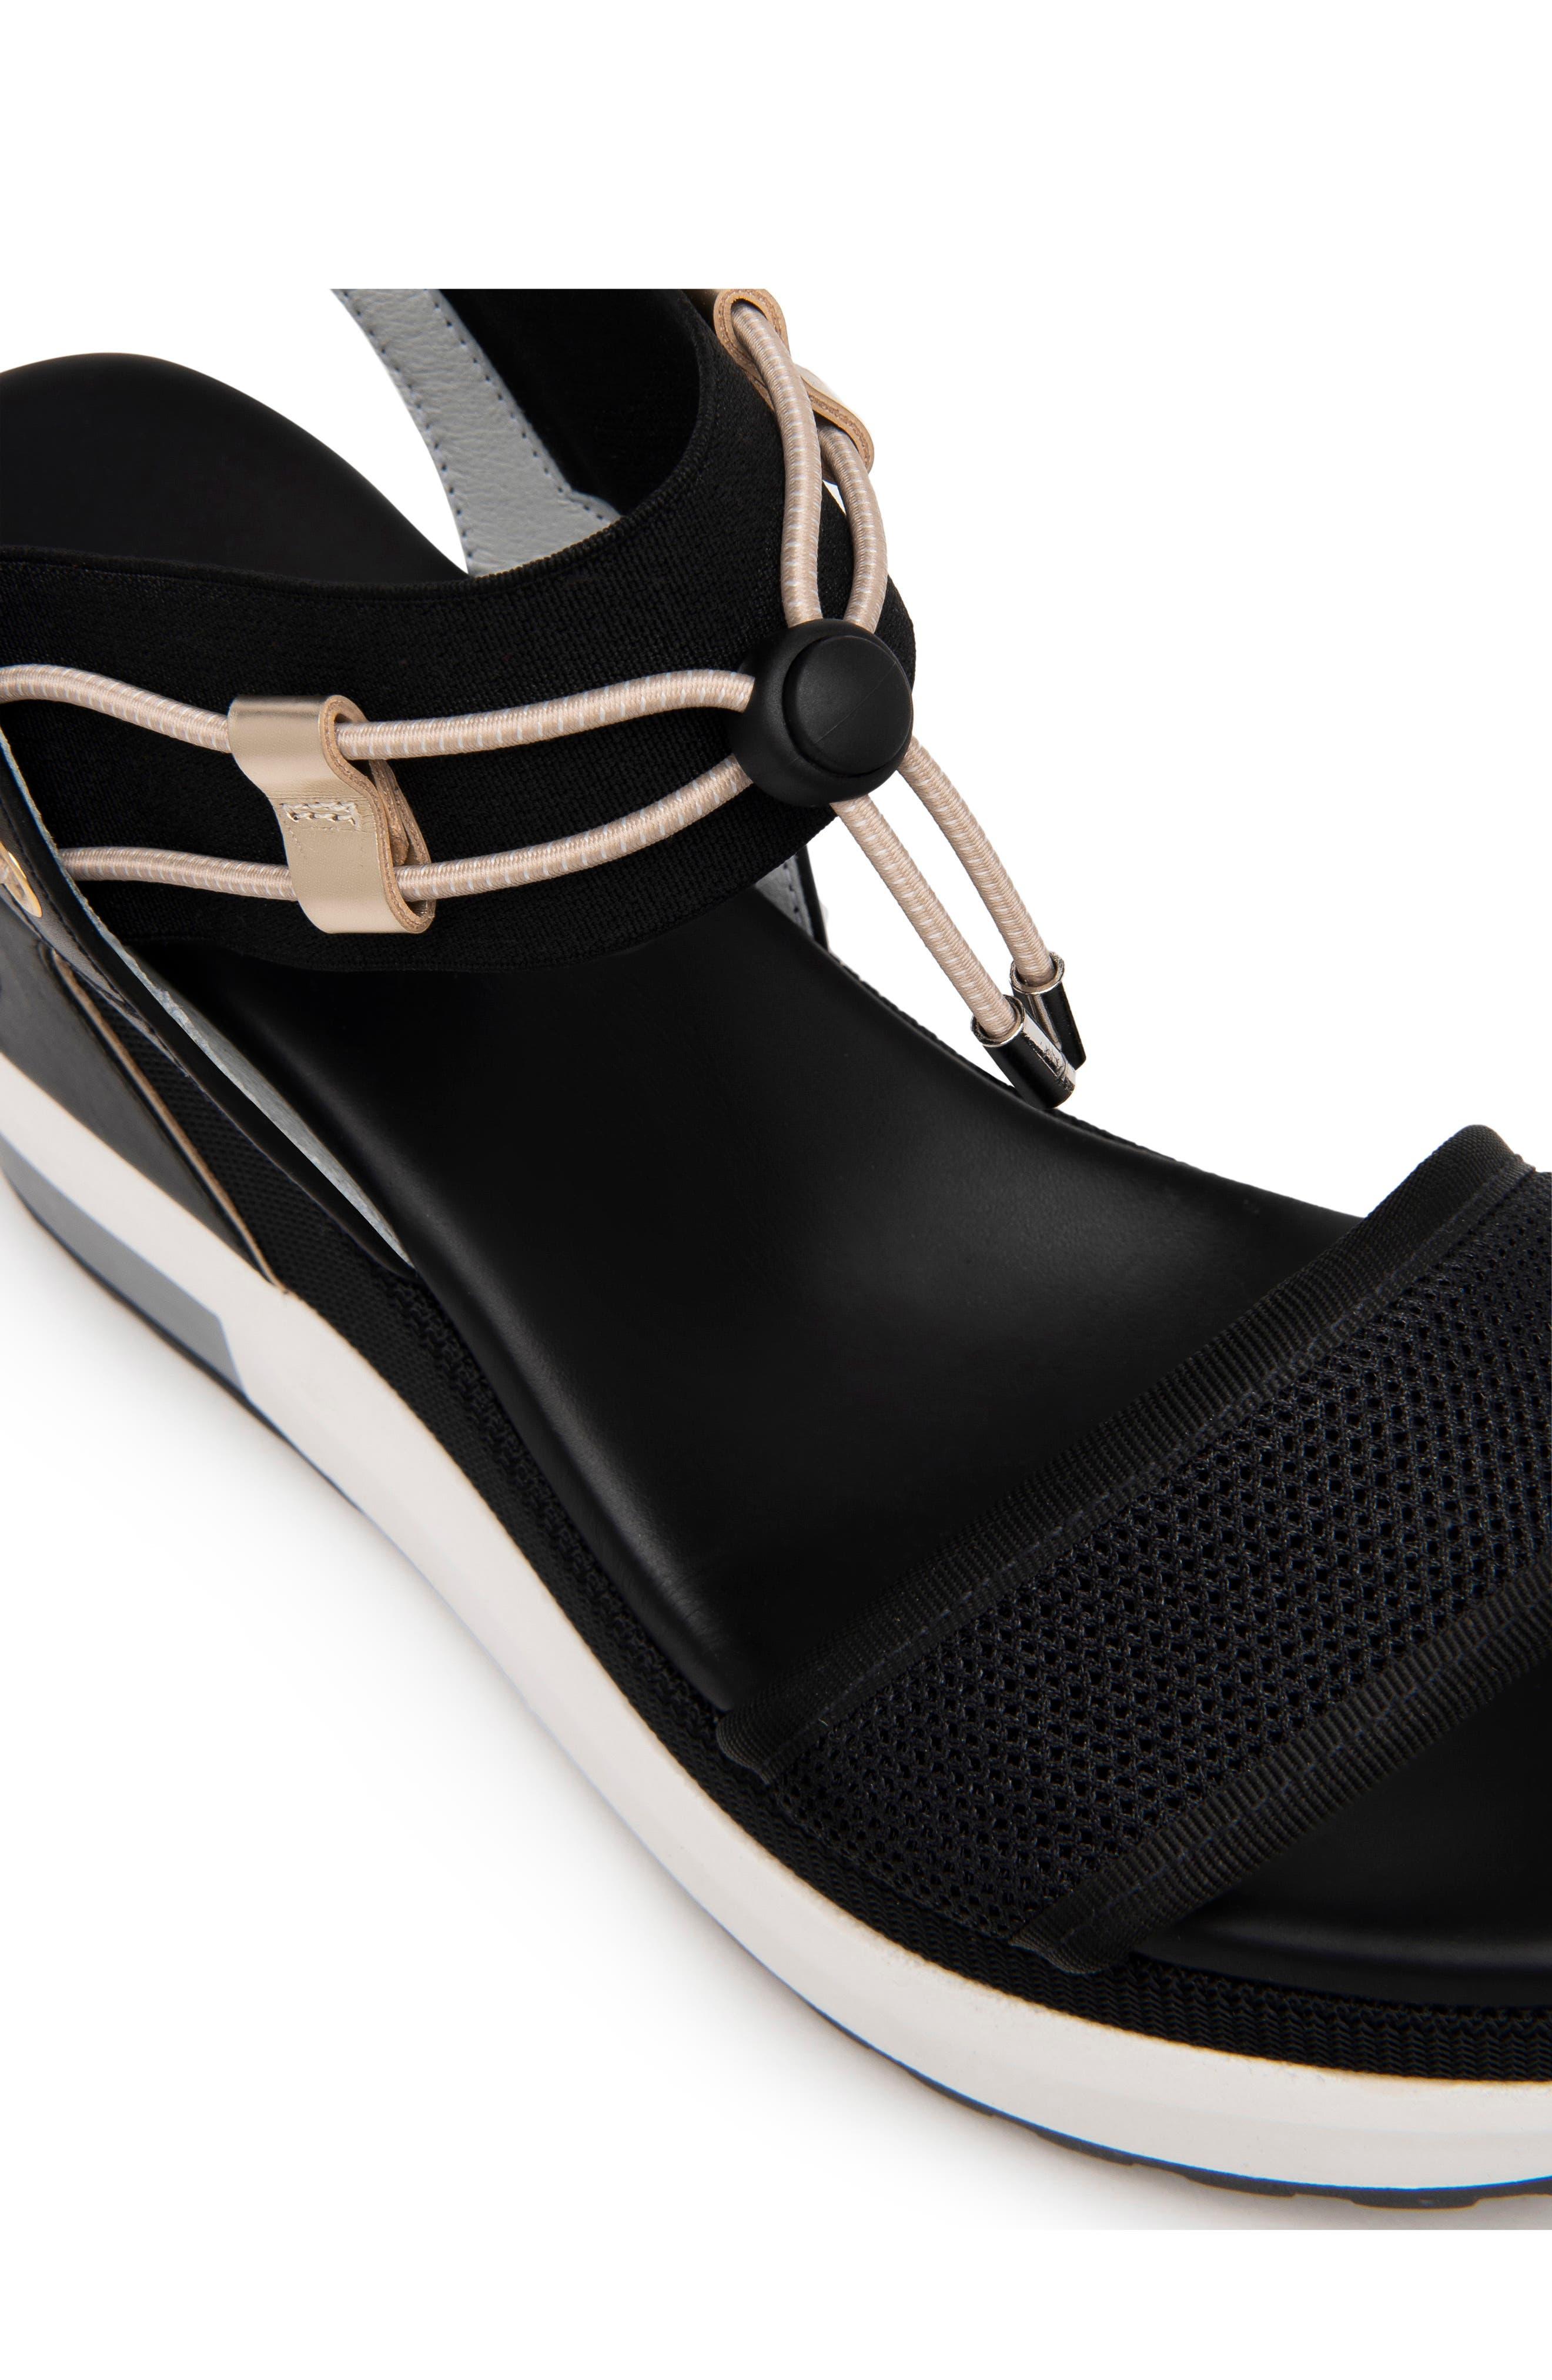 Nero Giardini Bungee Platform Wedge Sandal in Black | Lyst